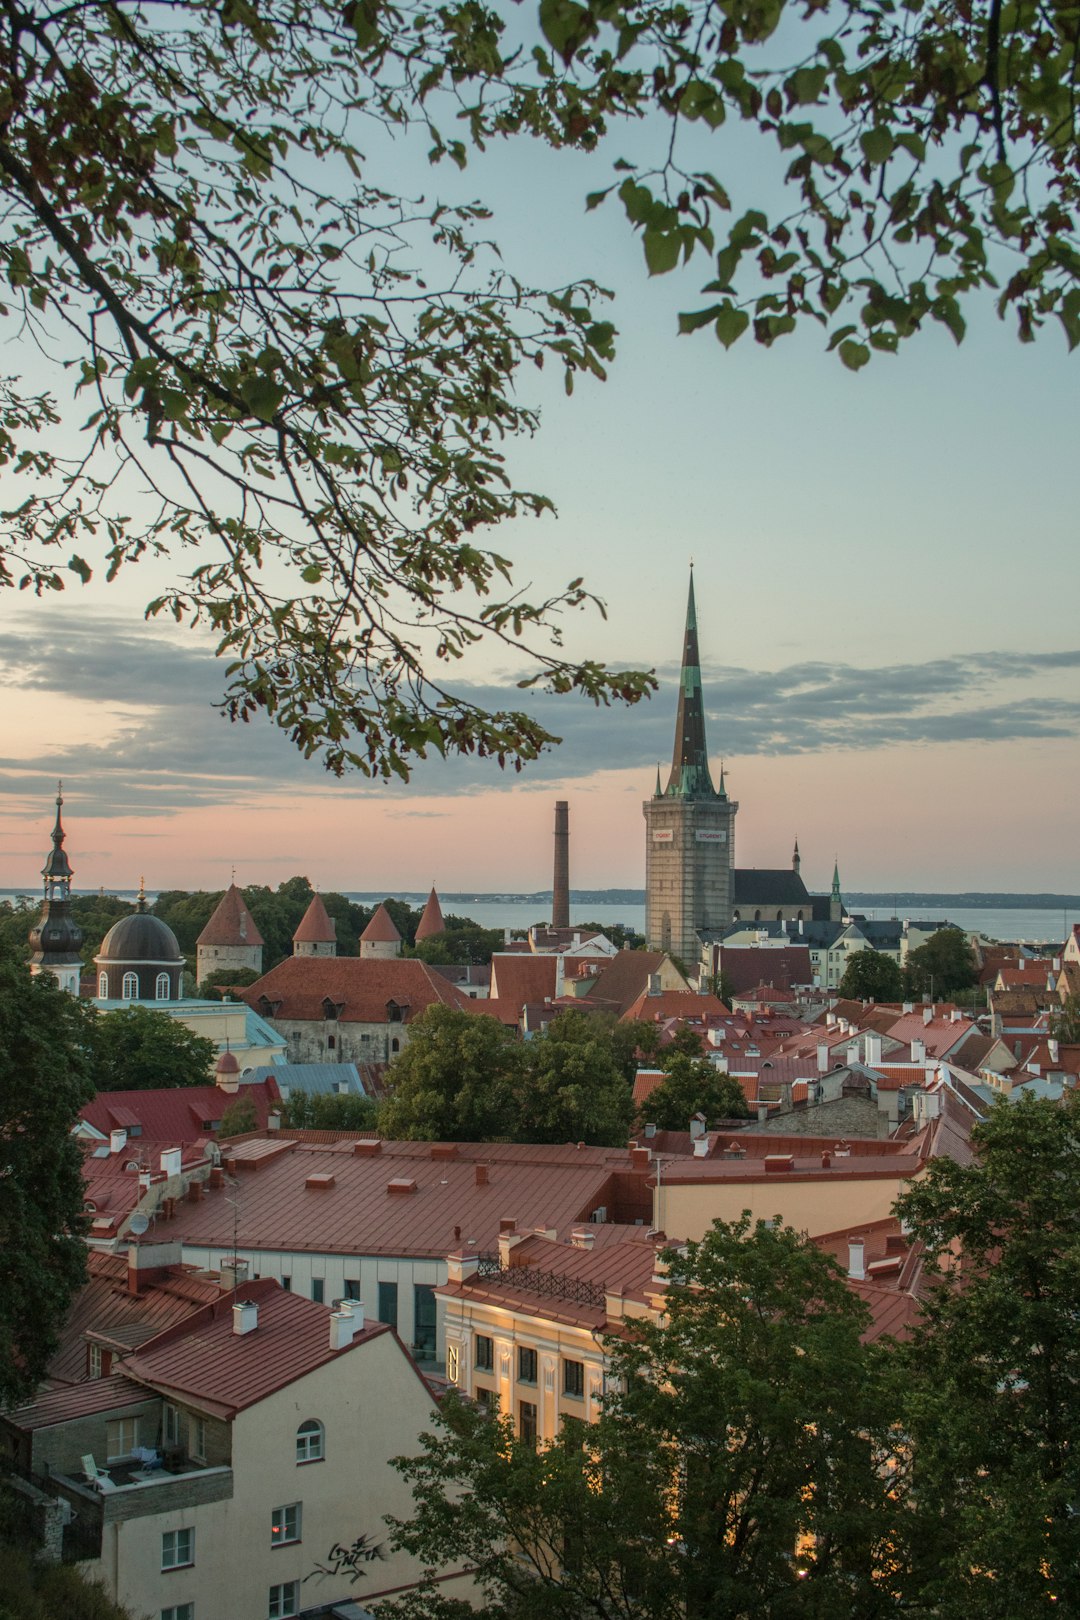 Town photo spot Tallinn Kohtuotsa Viewing platform